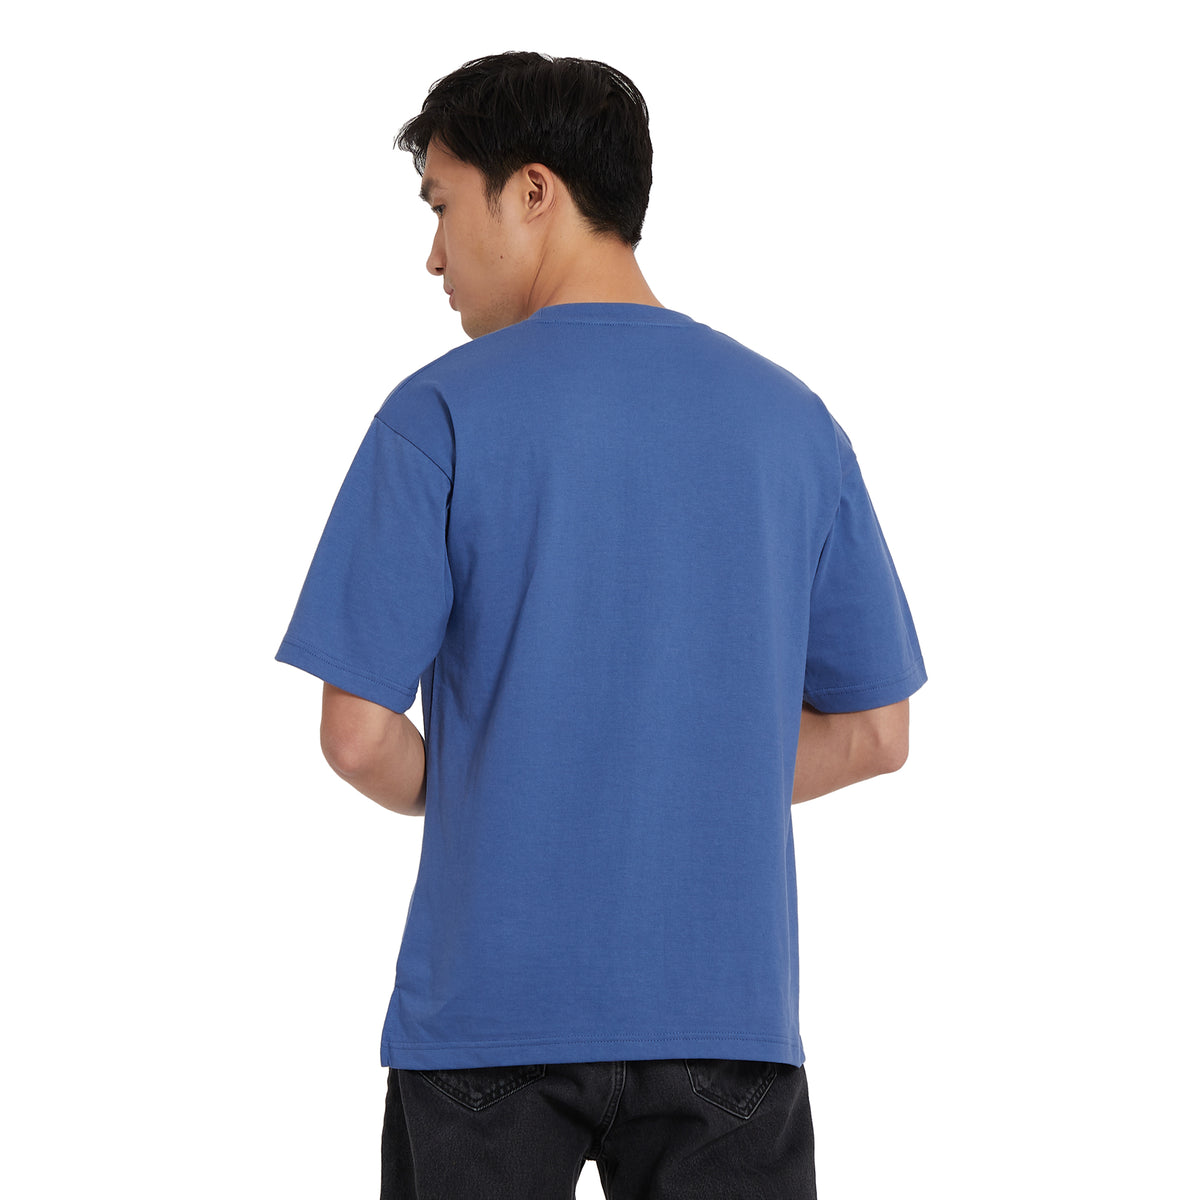 Cubic Men  Plain Oversized Shirt Tshirt Basic Tee T-Shirt Longback with Pokcet- CMBOS05R